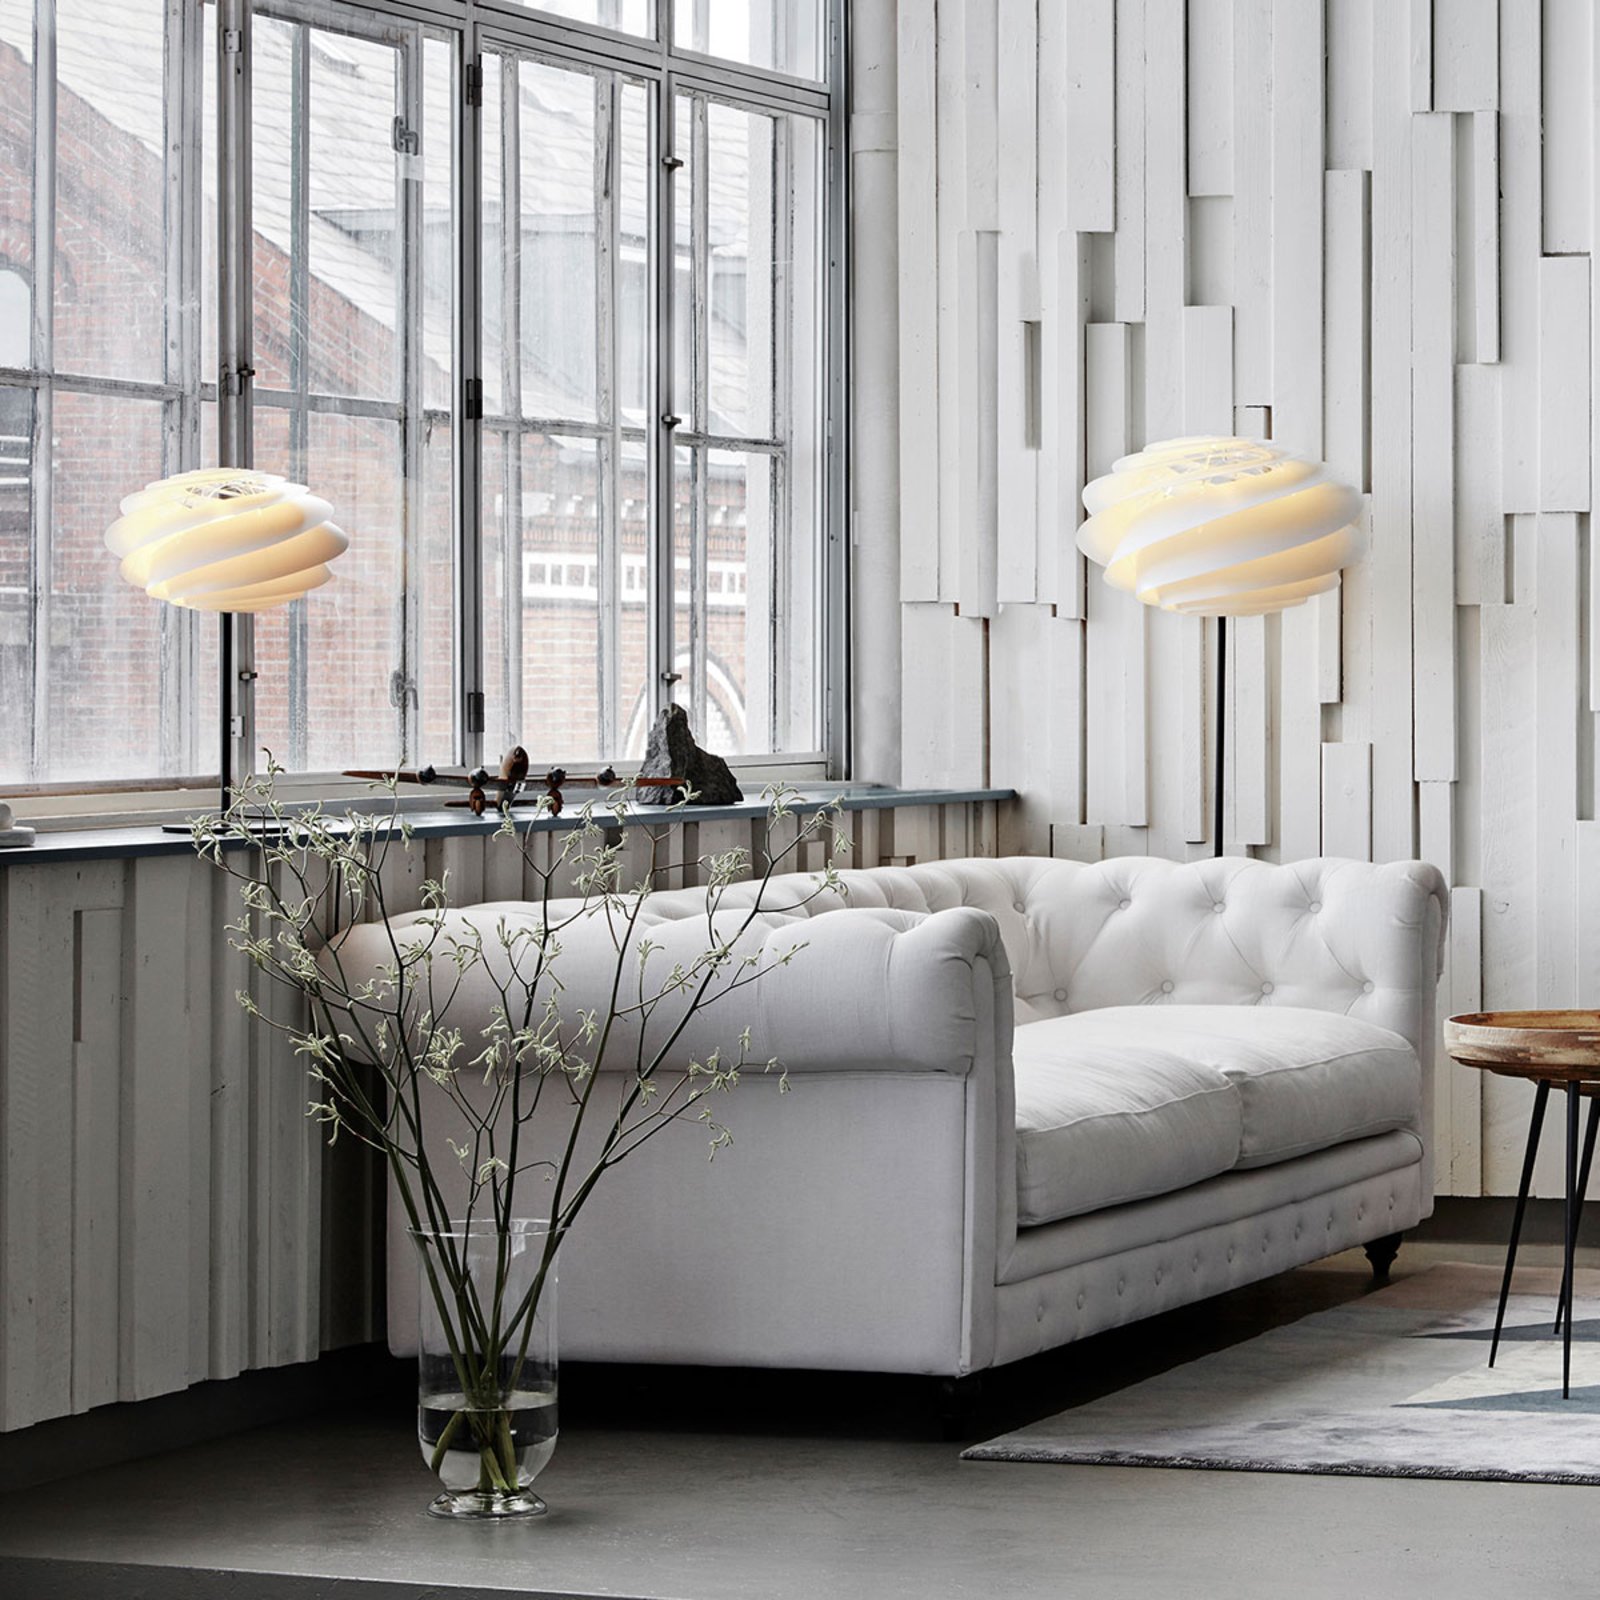 LE KLINT Swirl - lampadaire de designer blanc